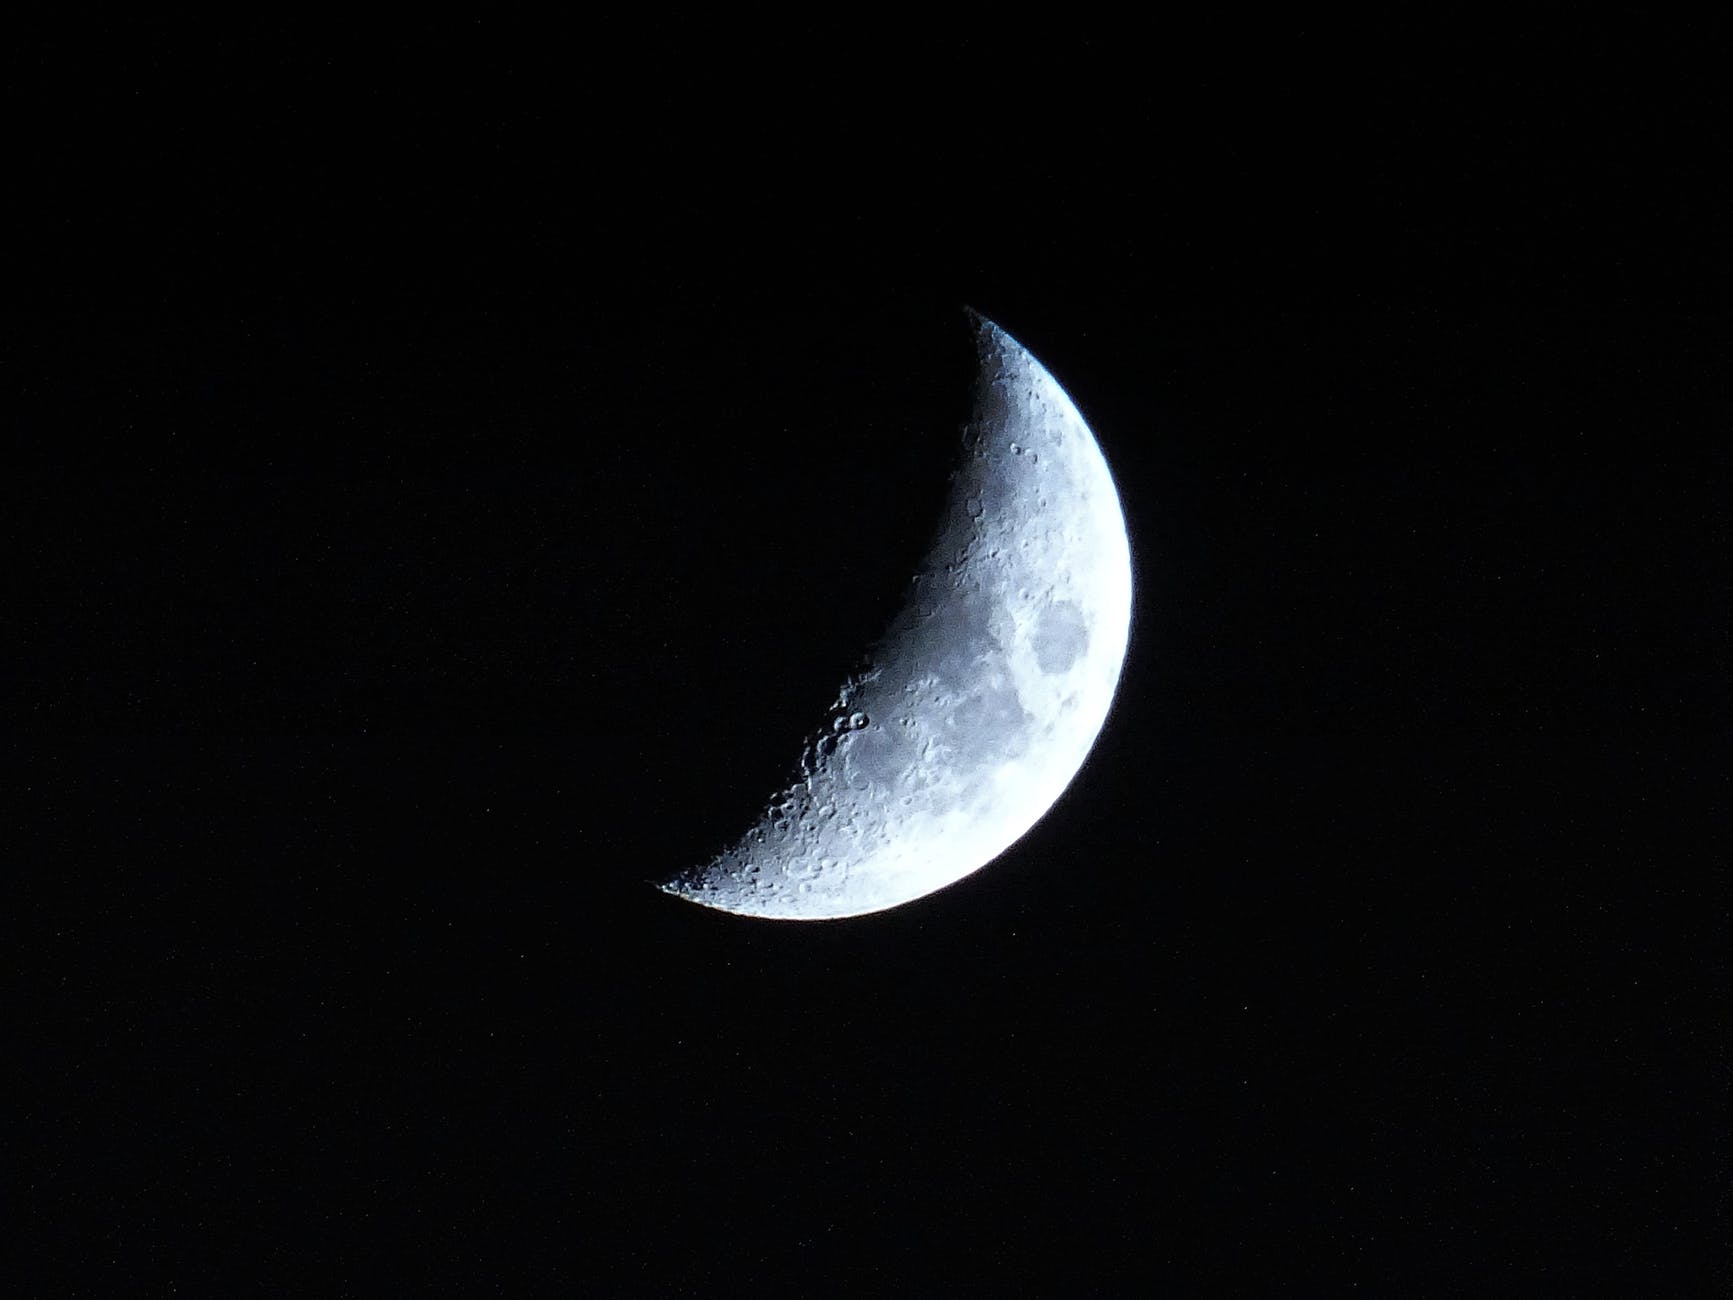 photograph of moon